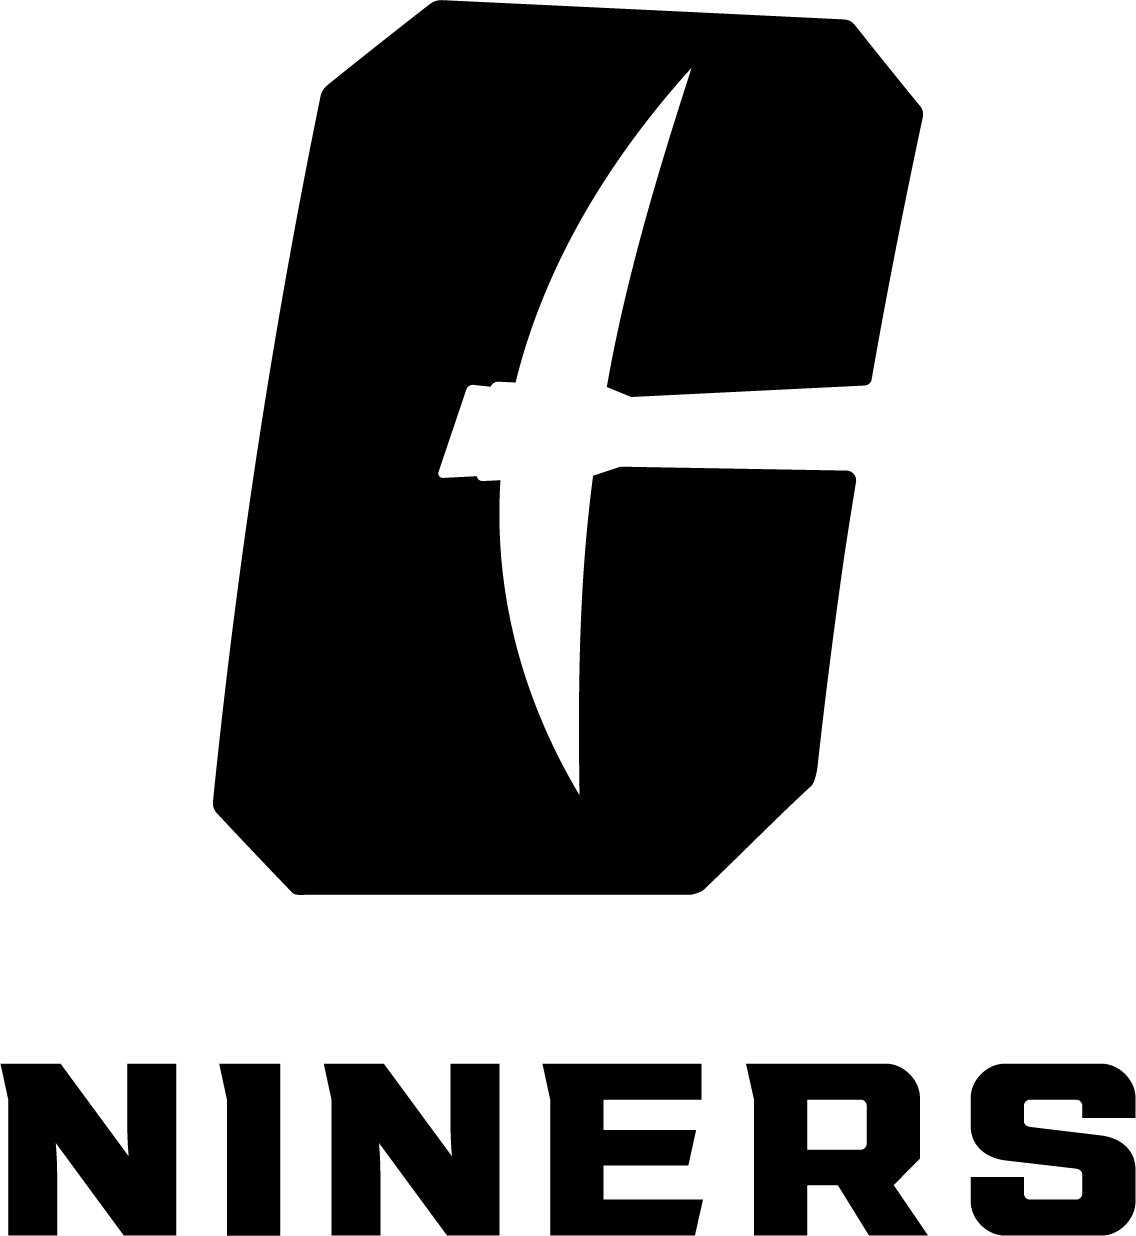  C NINERS